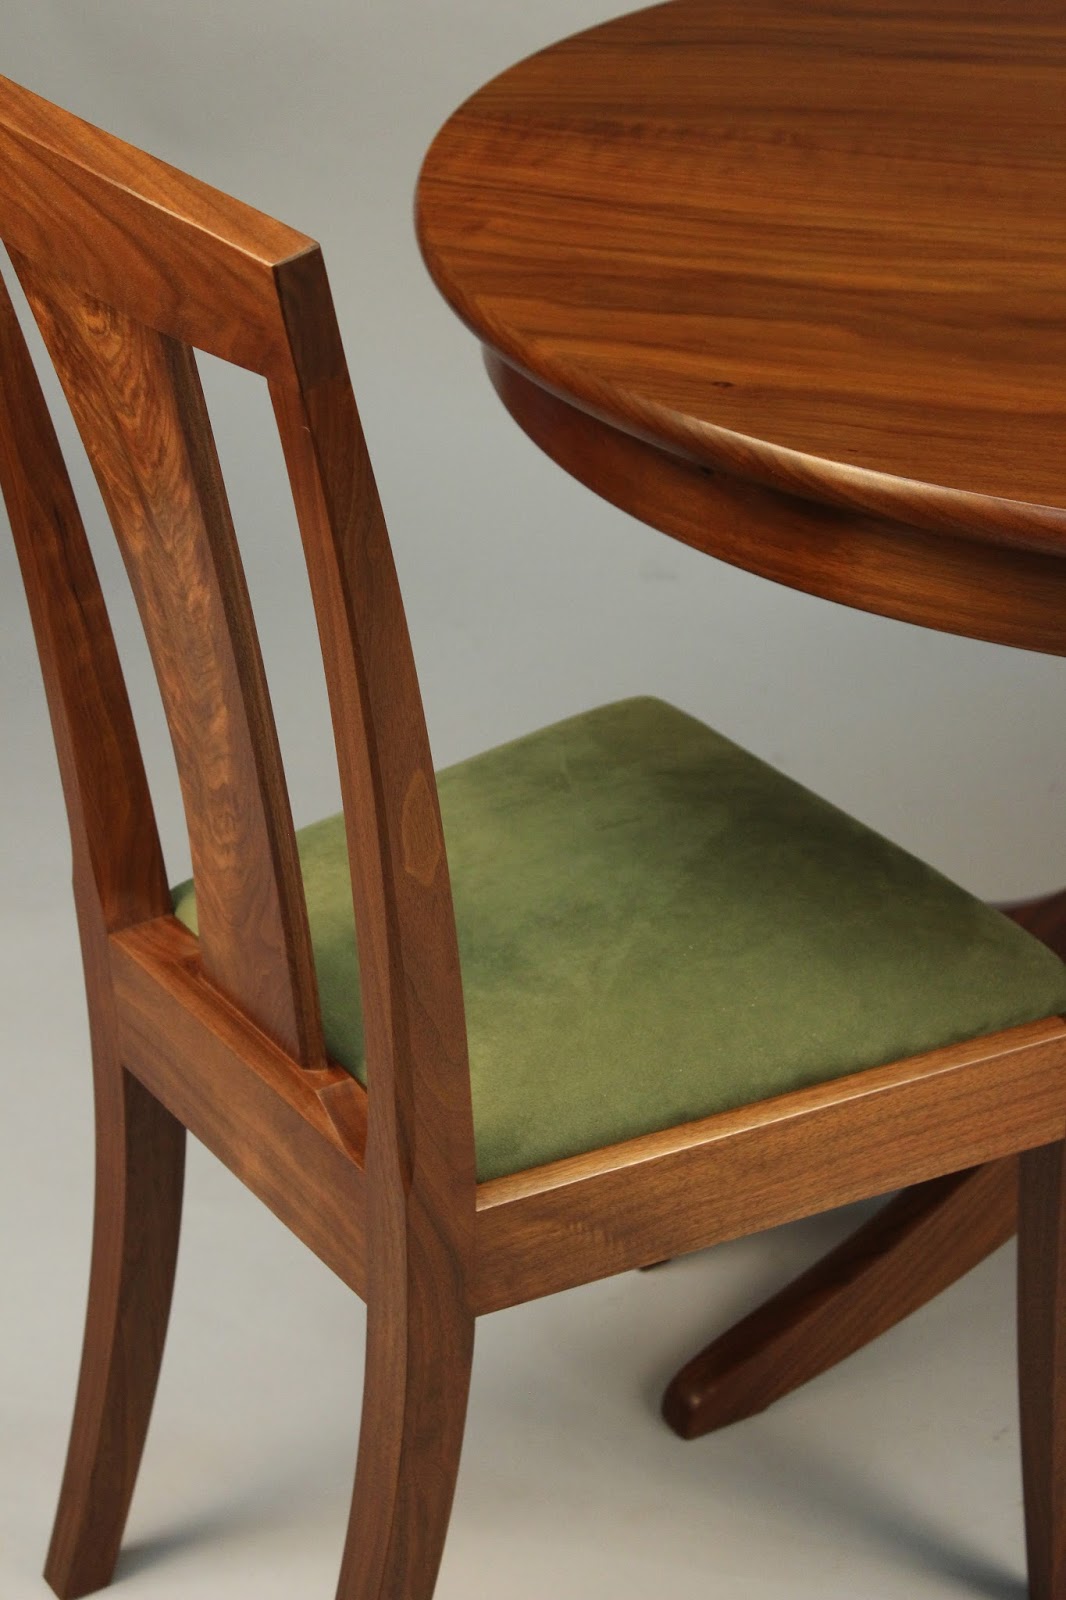 Handmade Table and Chair